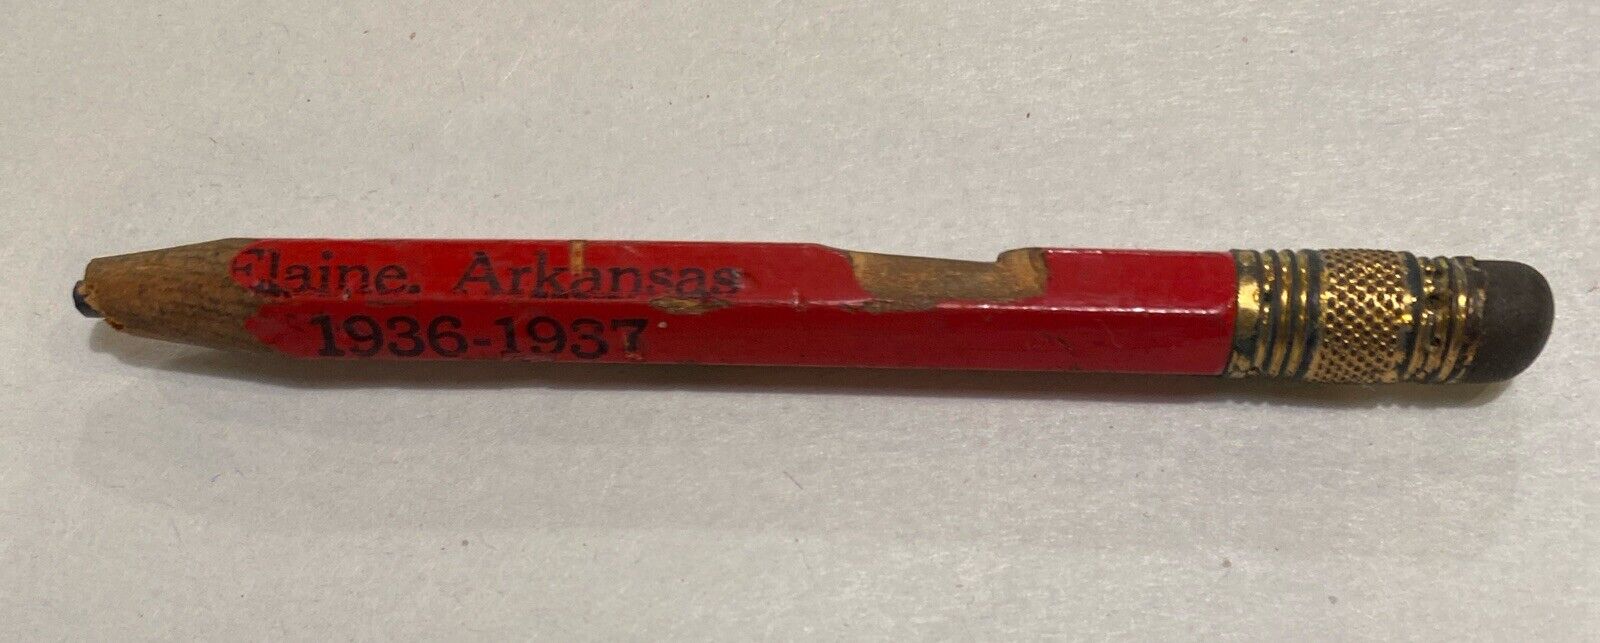 Vintage Elaine High School 1936-1937 Elaine Arkansas AR Wood Pencil Stub